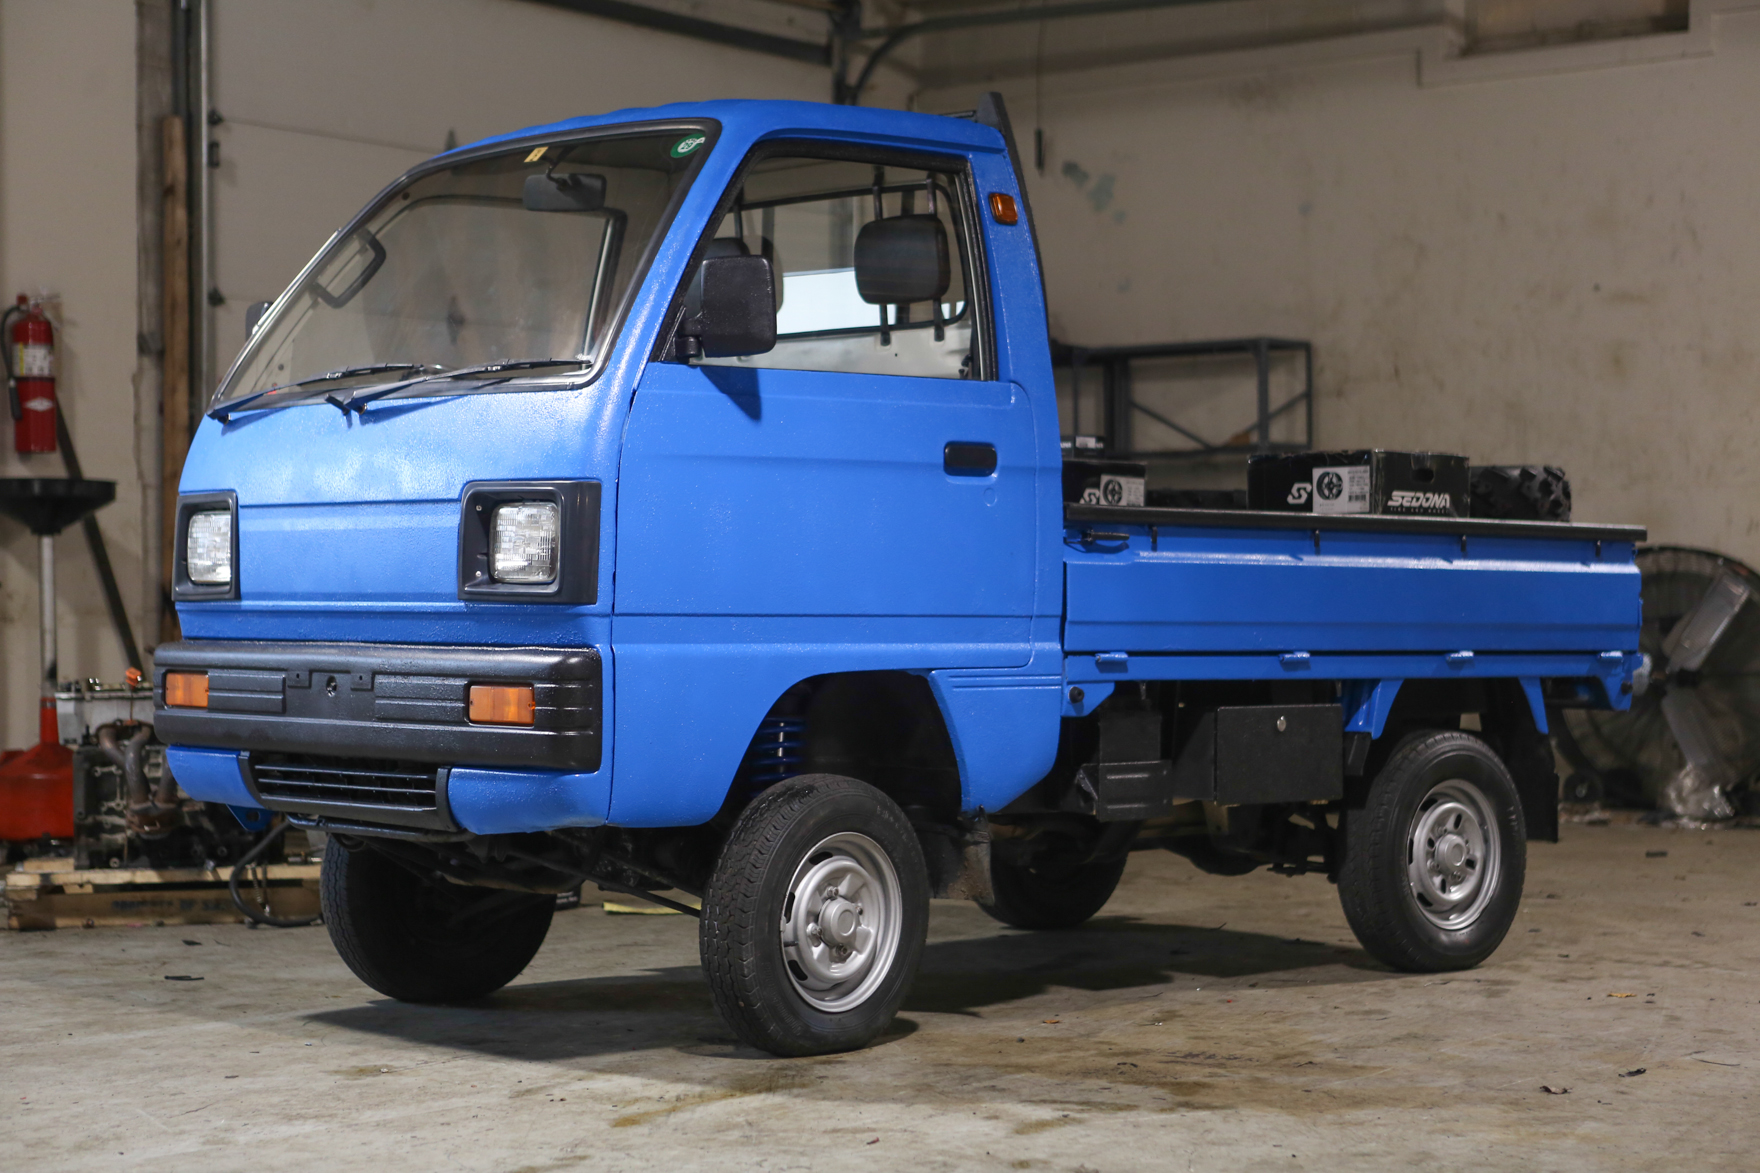 1988 Suzuki Carry 4WD - $5,600